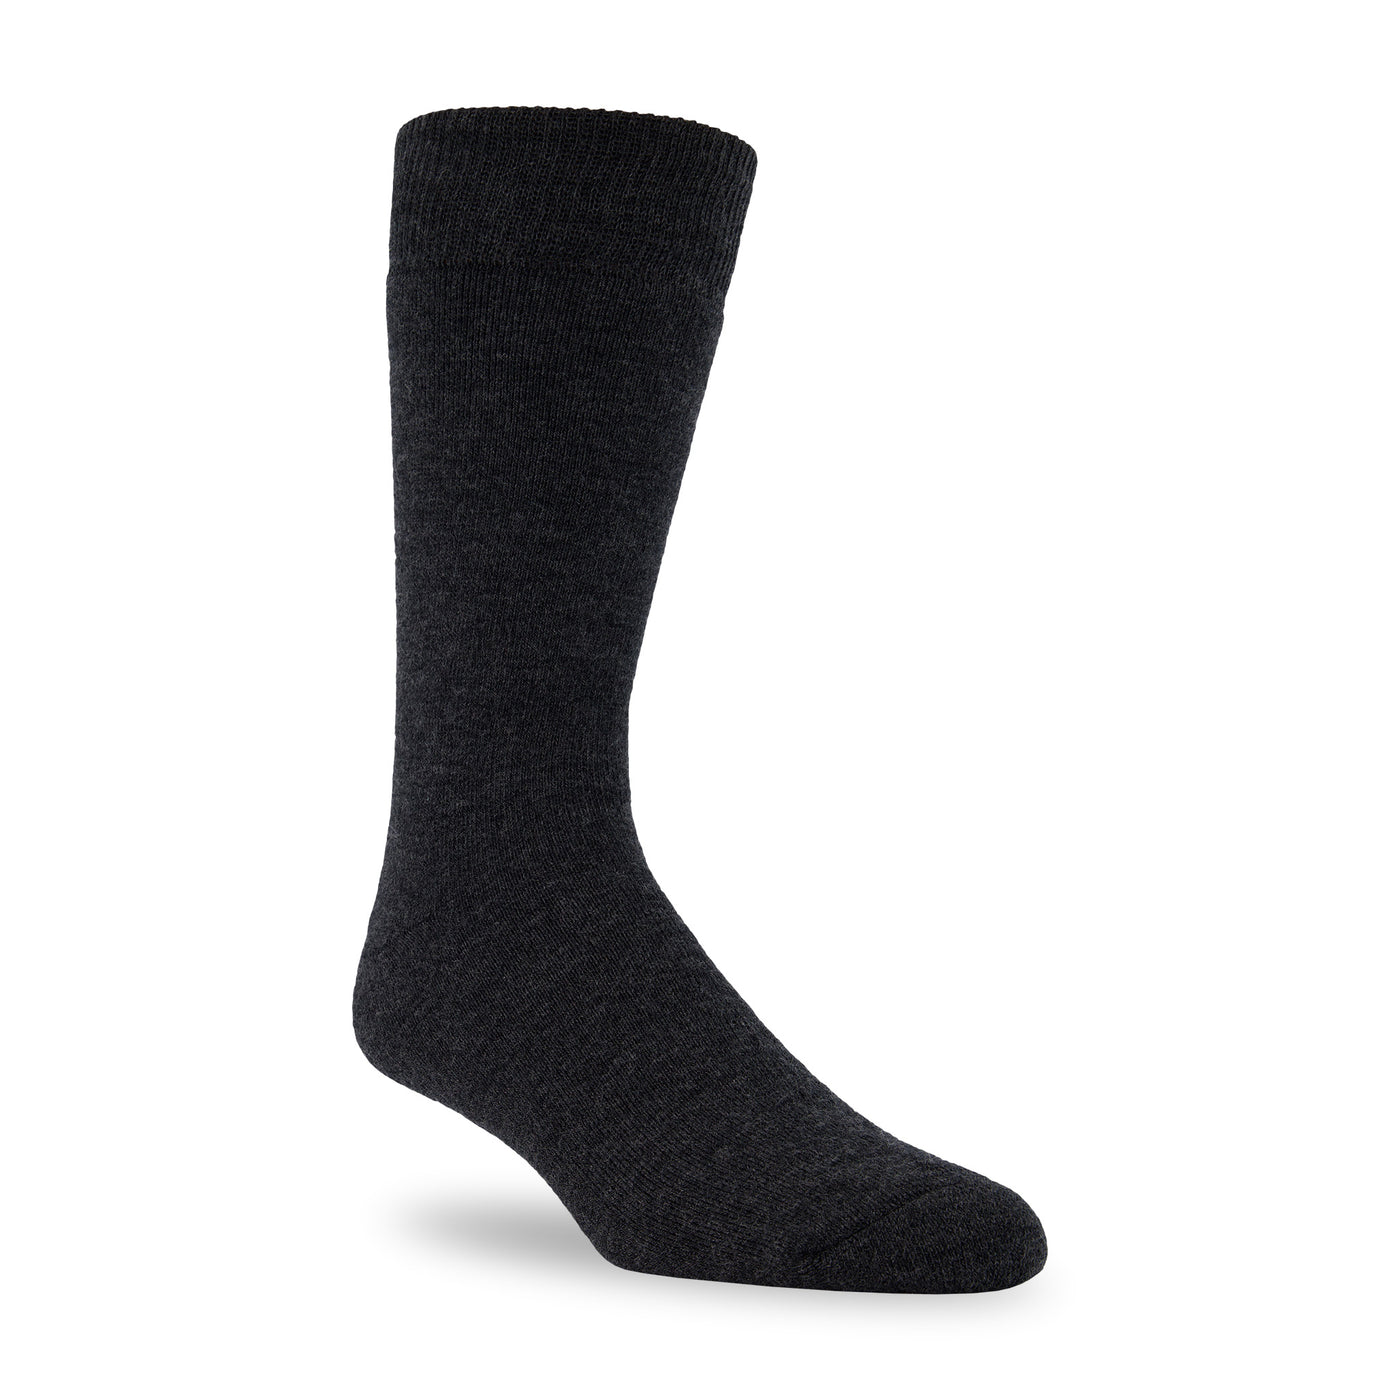 Charcoal Merino Wool Thermal Socks